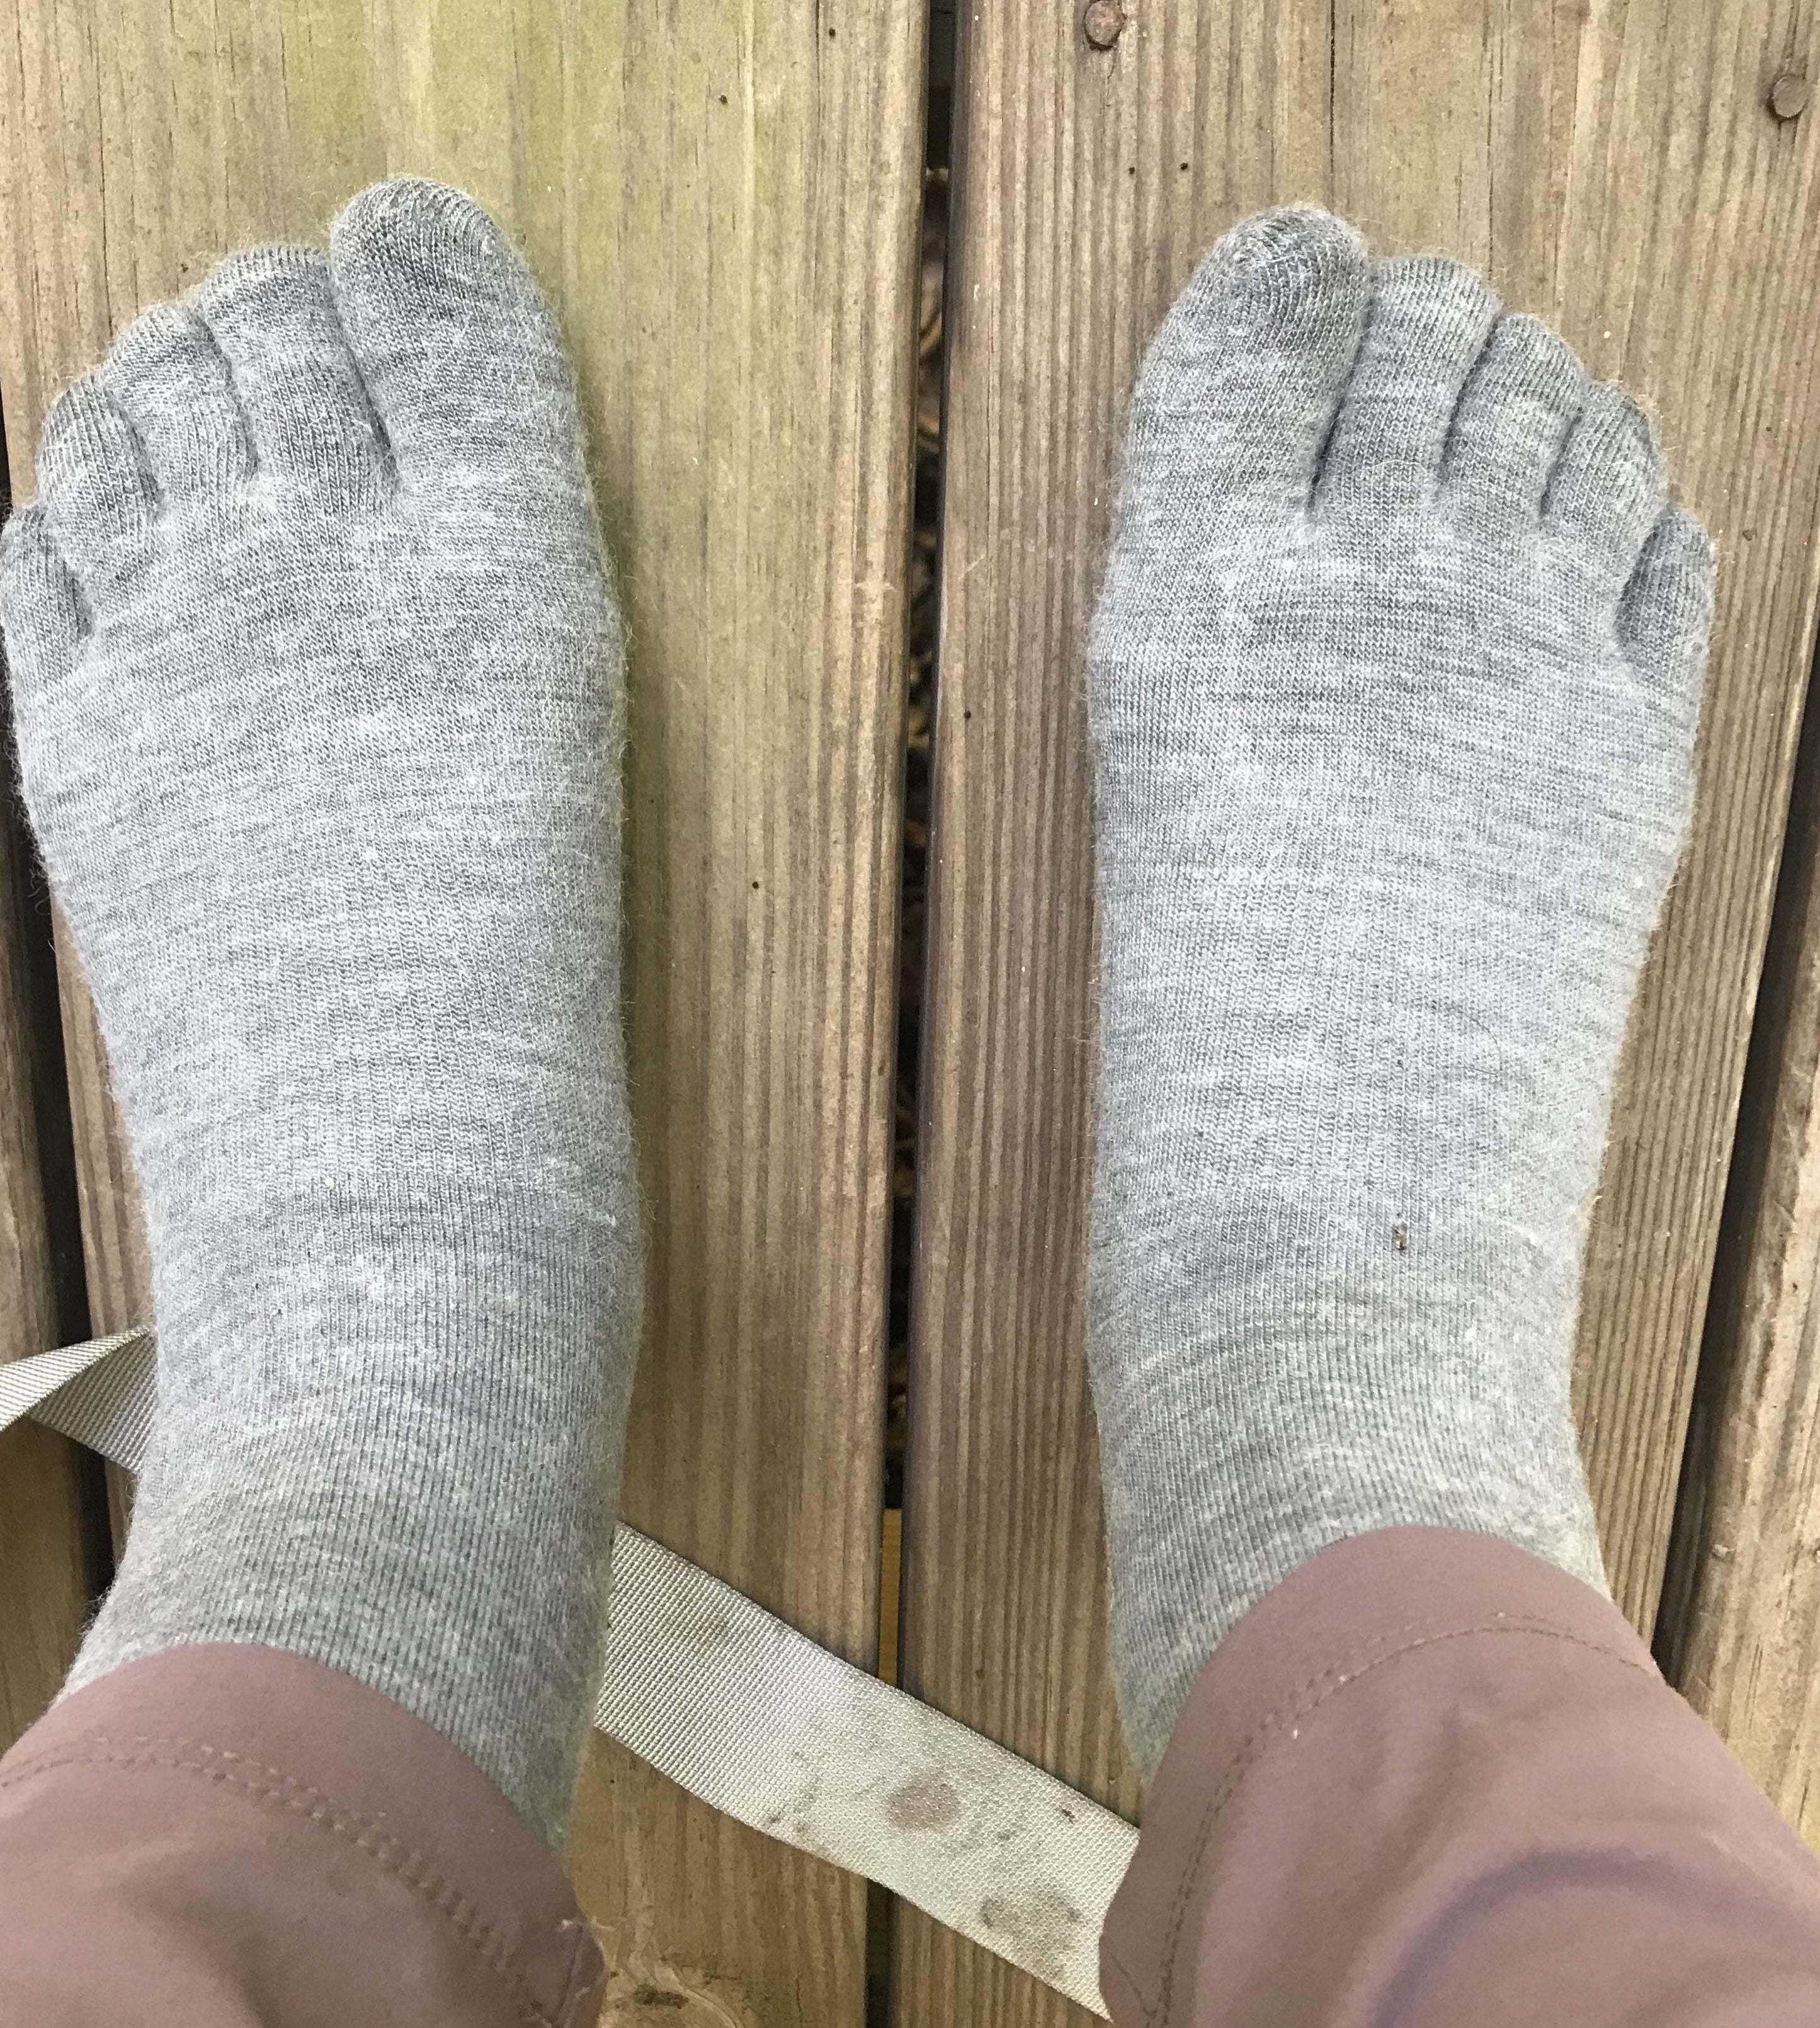 writer wearing light grey toe socks